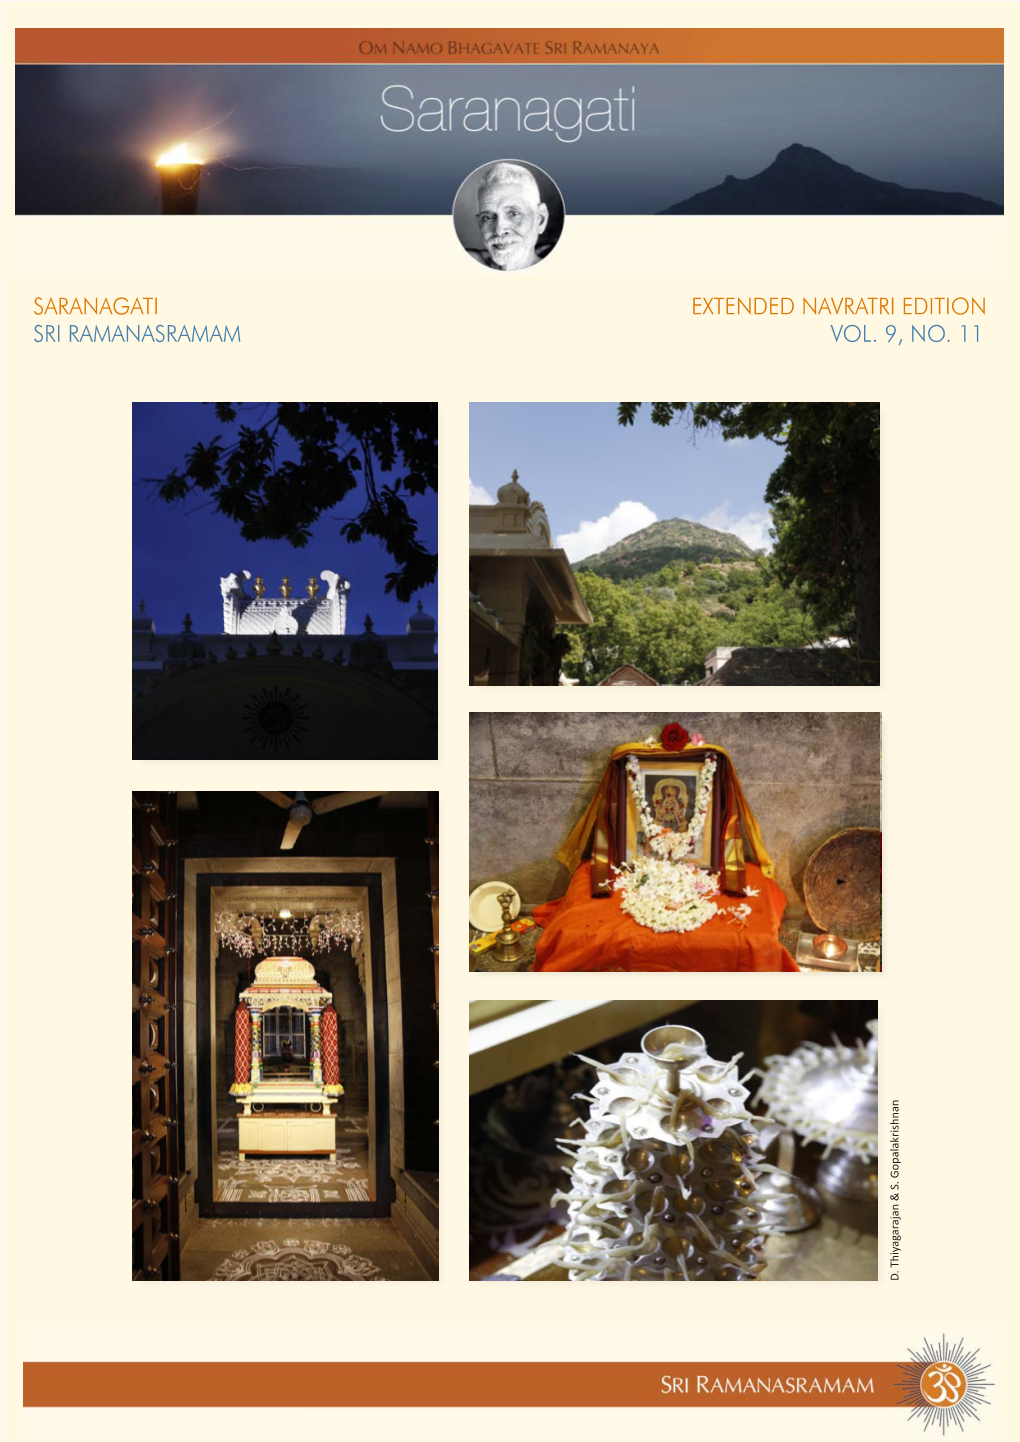 Extended Navratri Edition Vol. 9, No. 11 Saranagati Sri